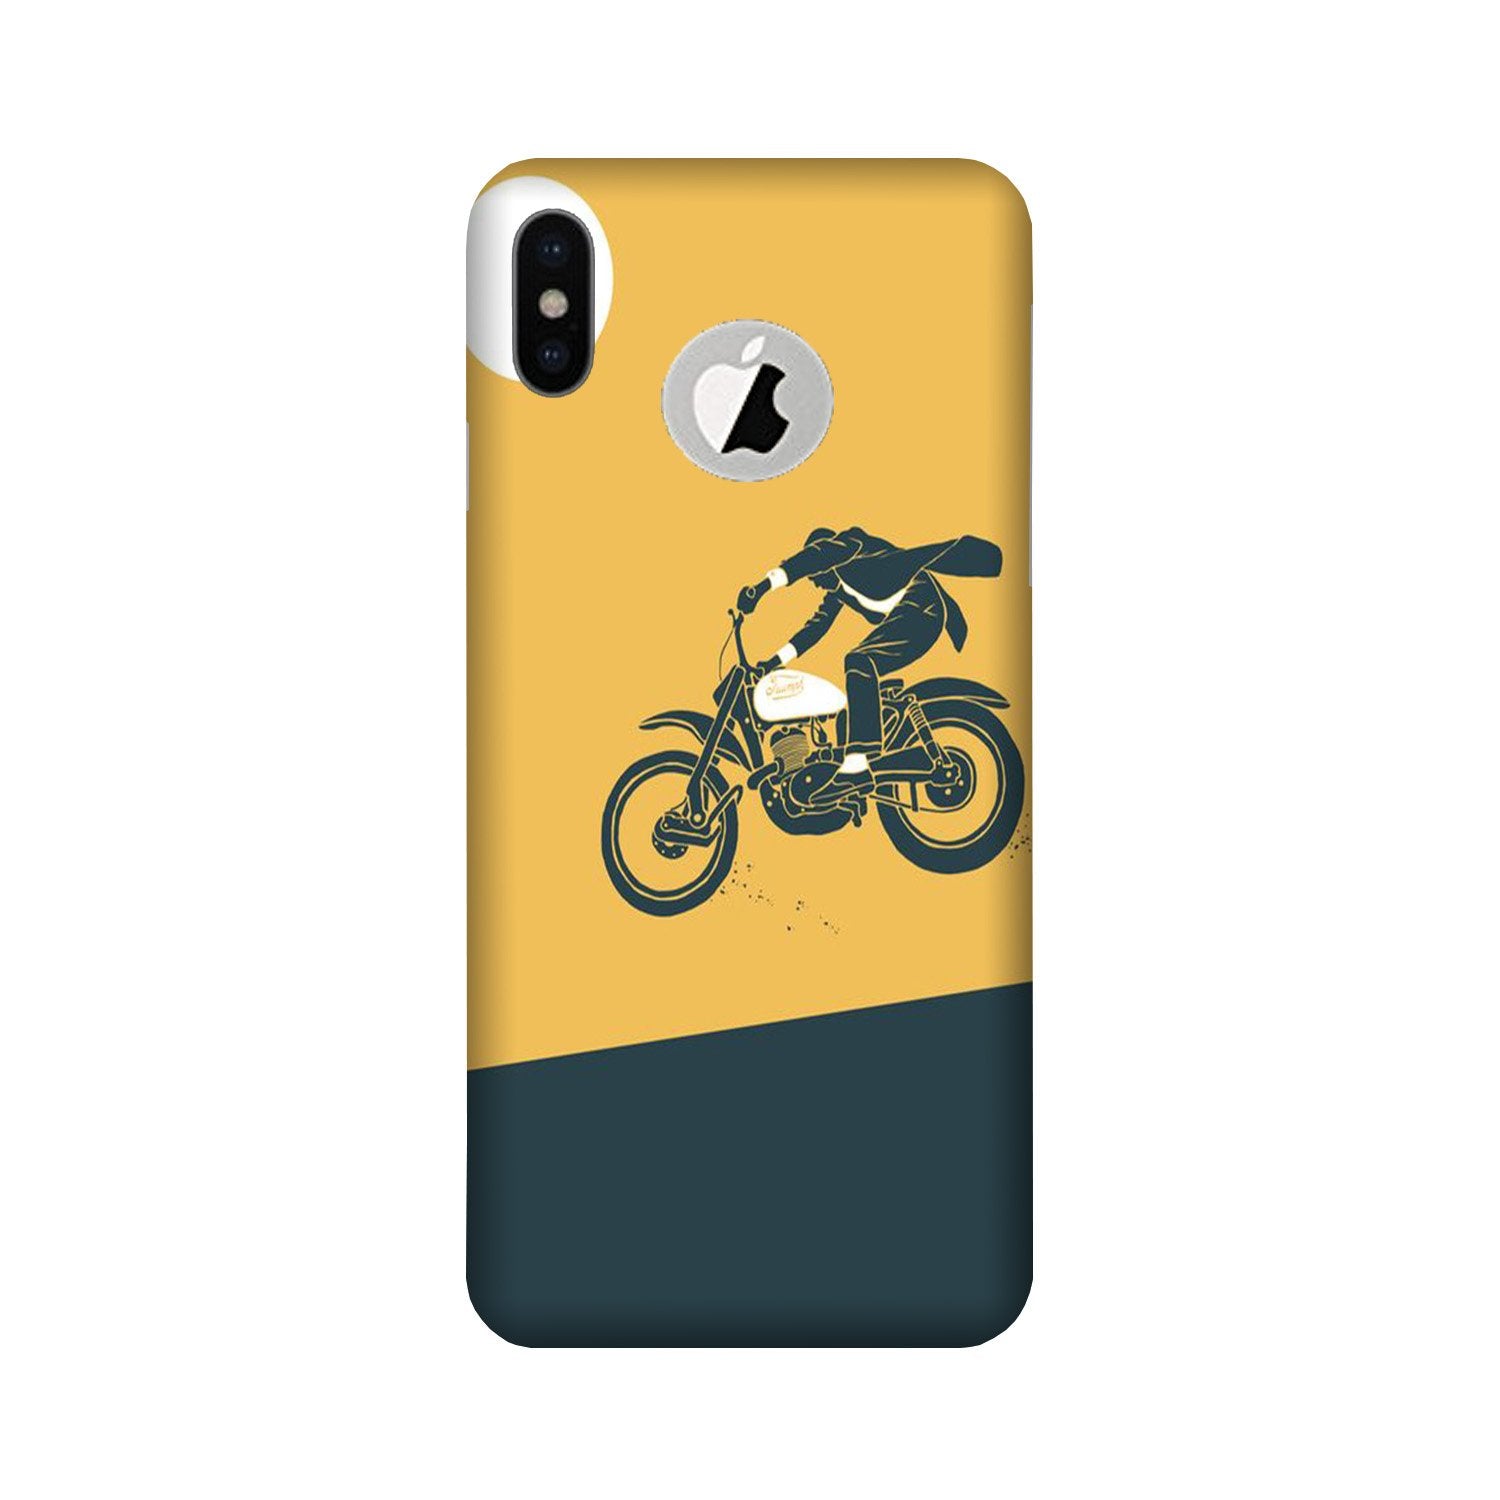 Bike Lovers Case for iPhone X logo cut (Design No. 256)